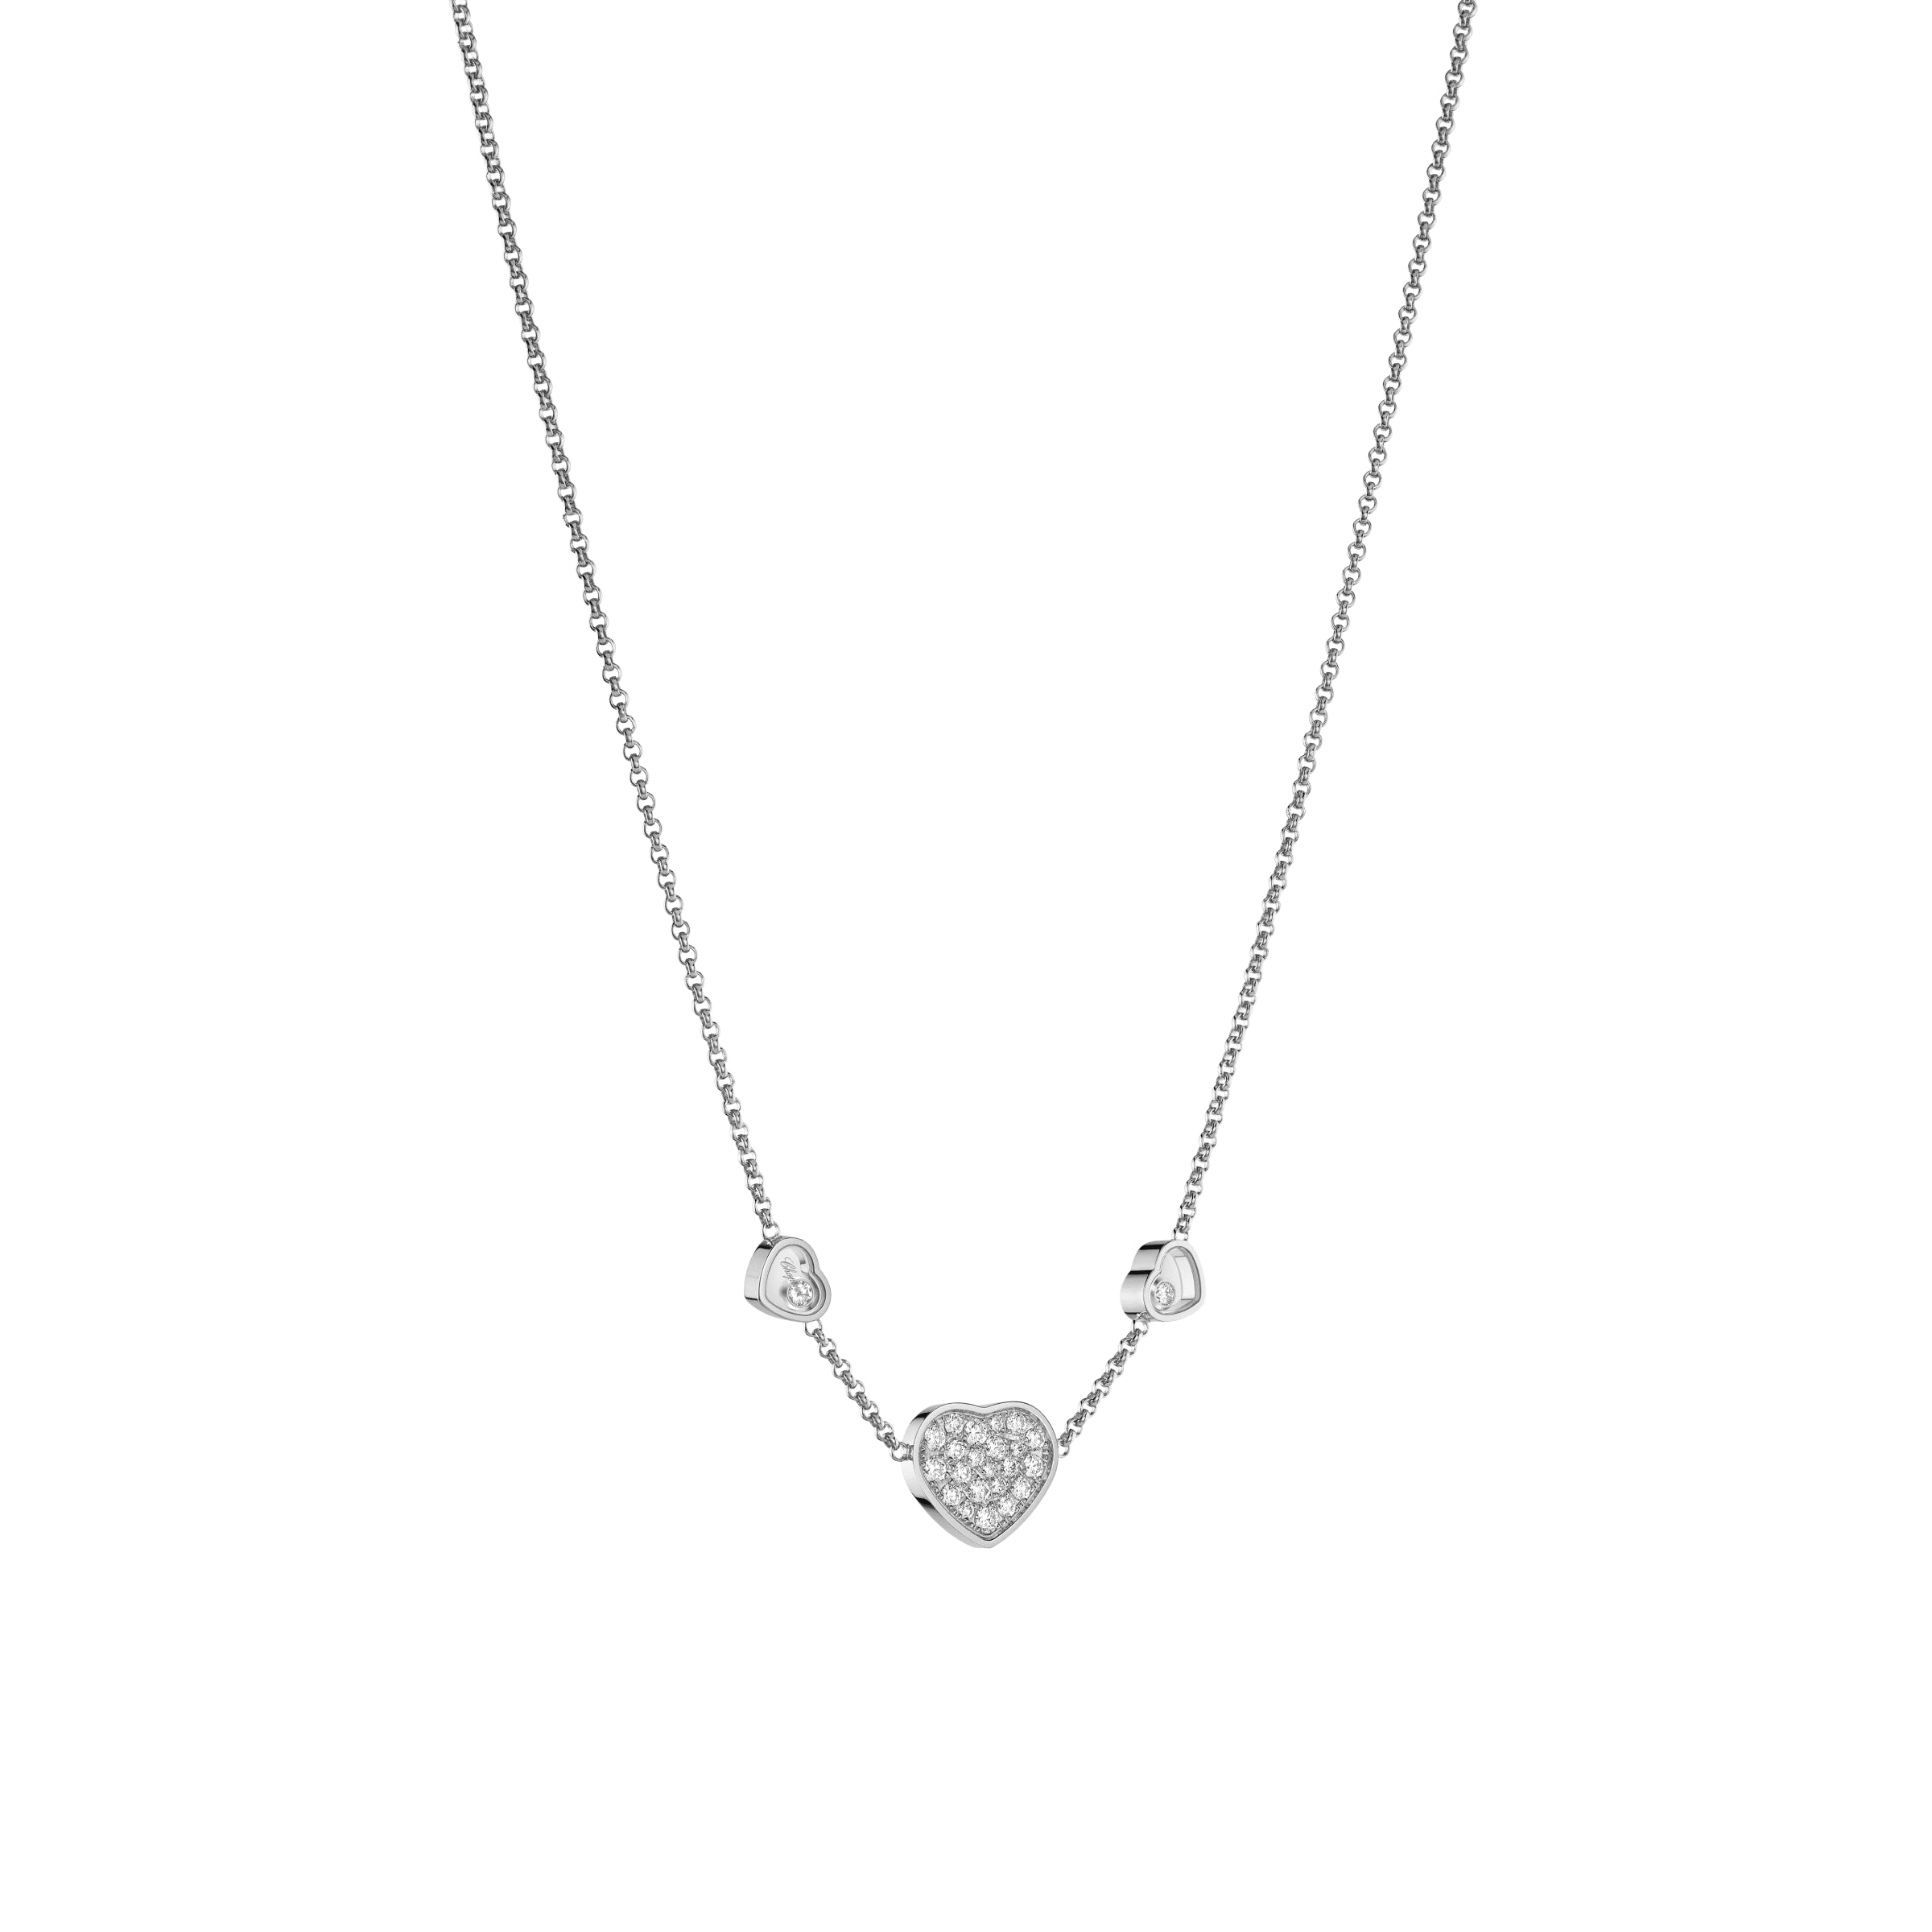  My Happy Hearts necklace2